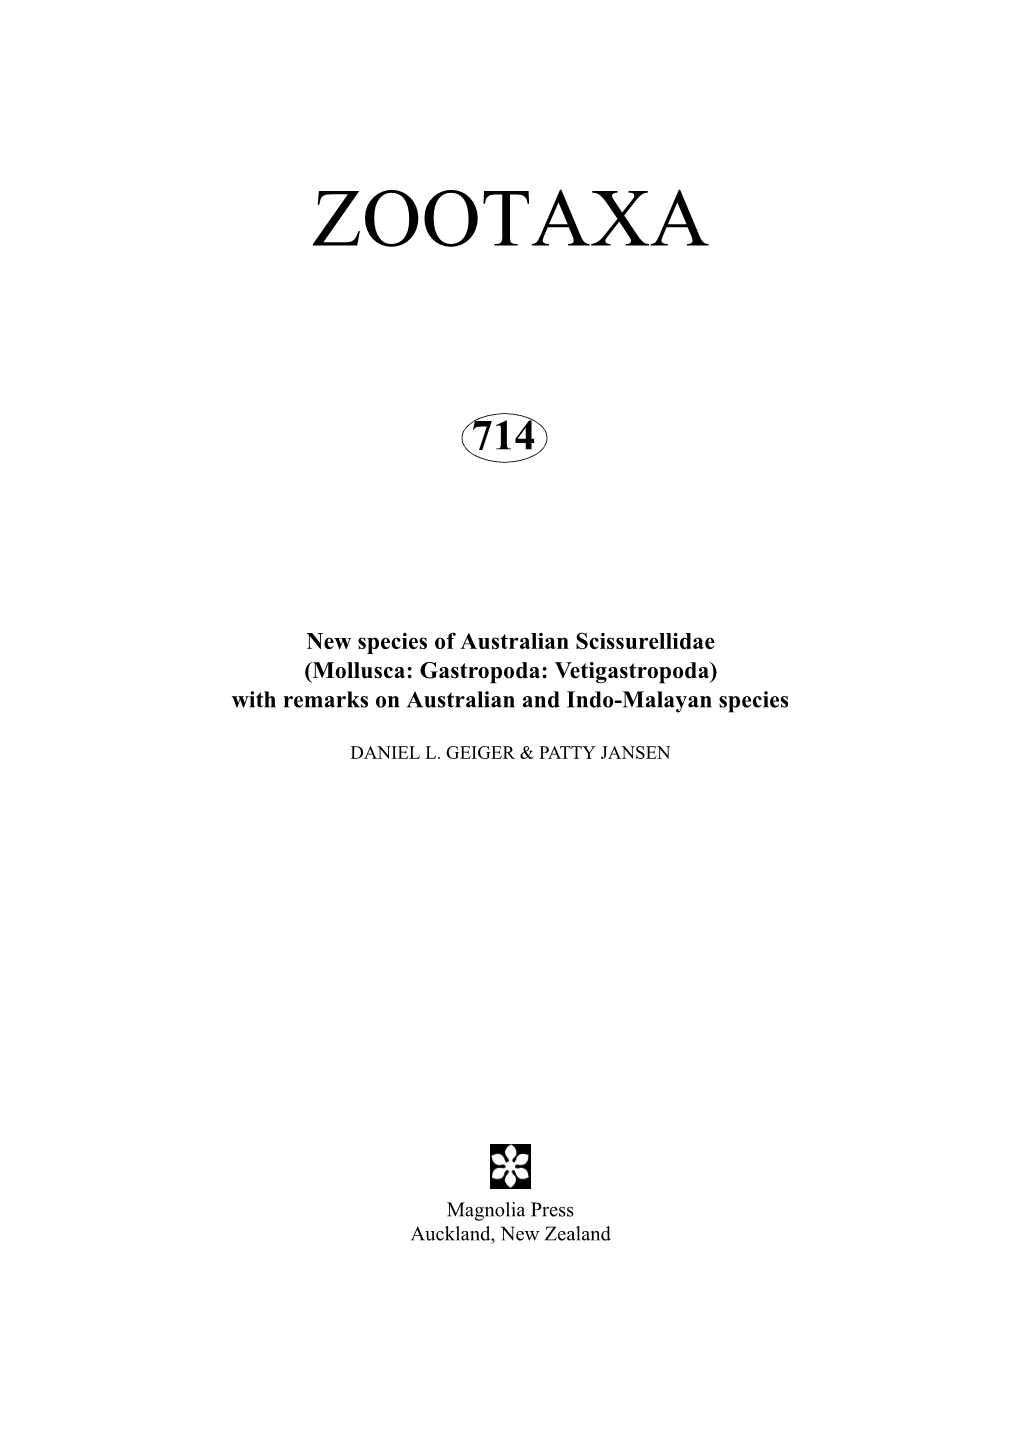 Zootaxa, Mollusca, Vetigastropoda